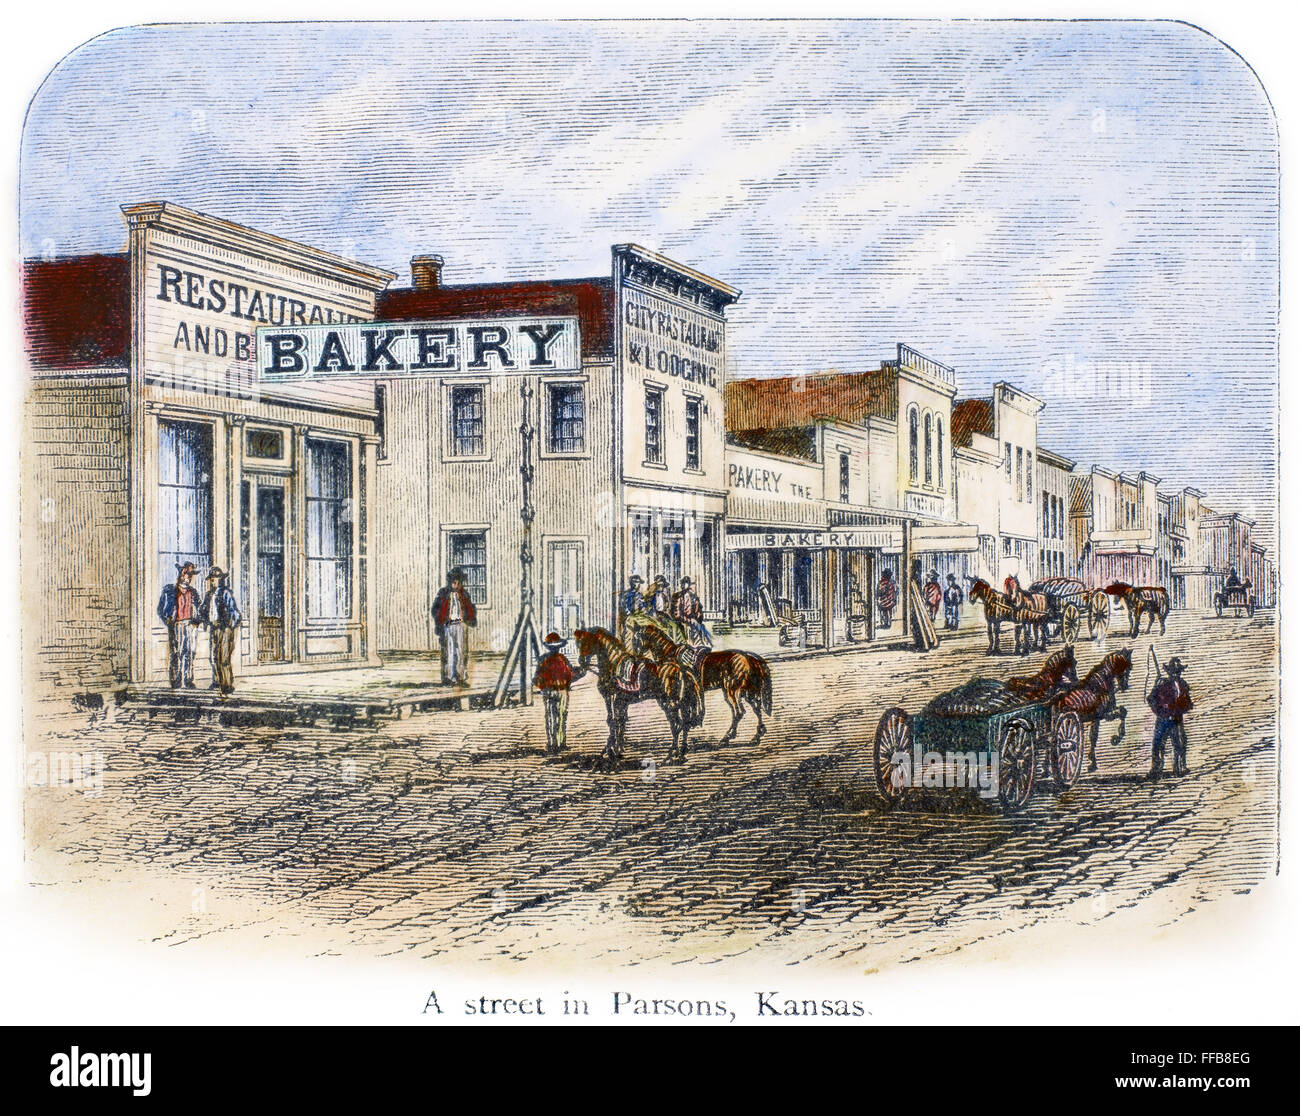 KANSAS: PARSONS, 1875. /nA street in Parsons, Kansas. Wood engraving, 1875. Stock Photo